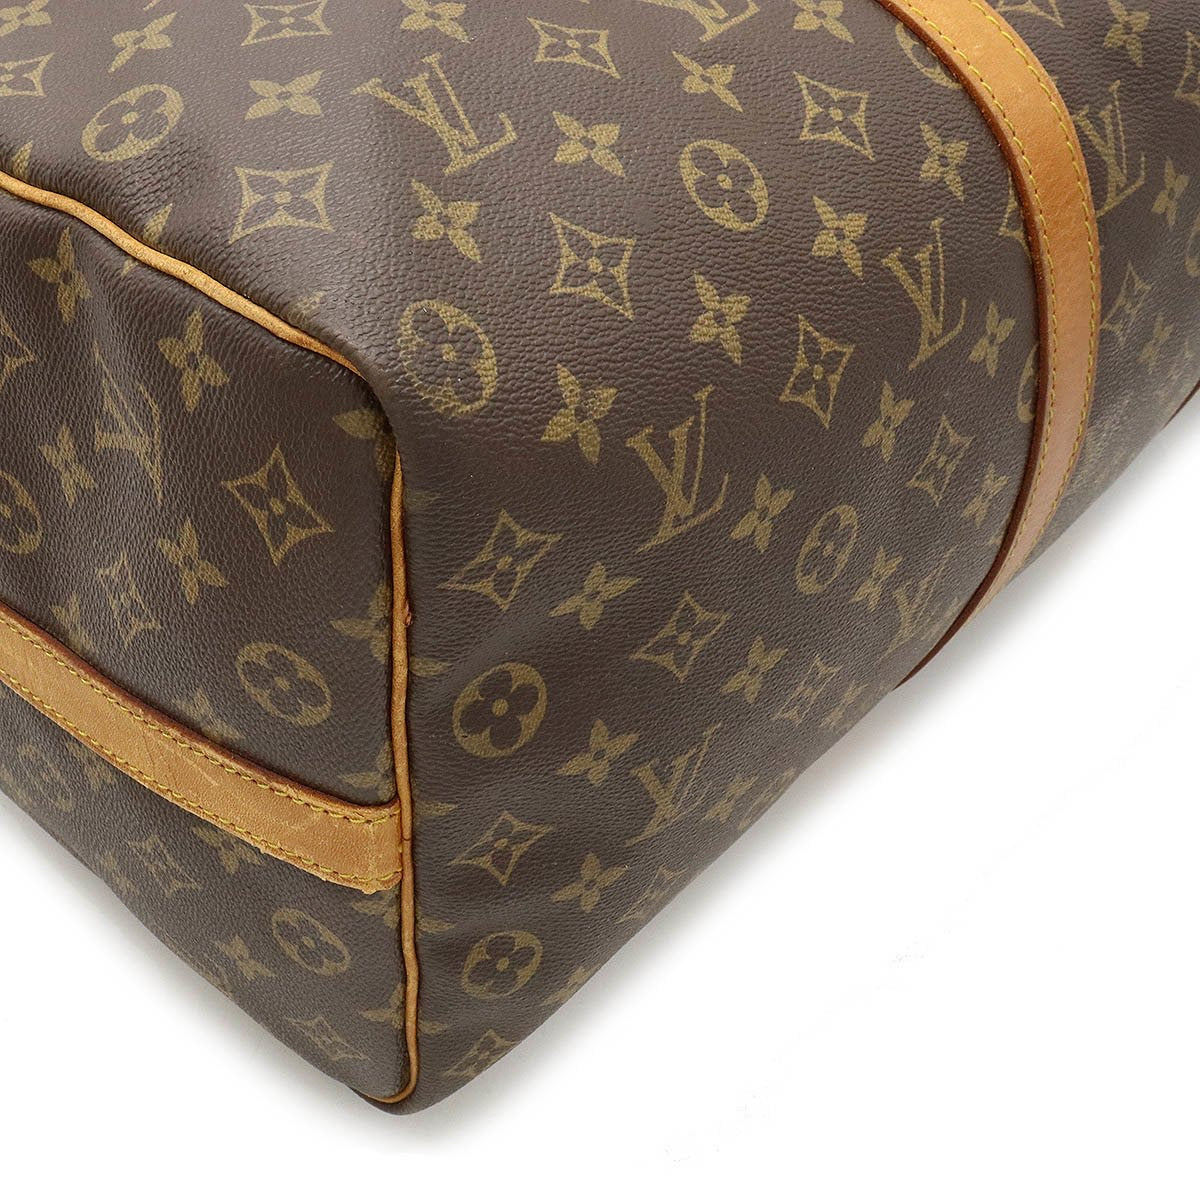 Louis Vuitton Sirius 50 Boston Bag Travel Bag Briefcase M41406